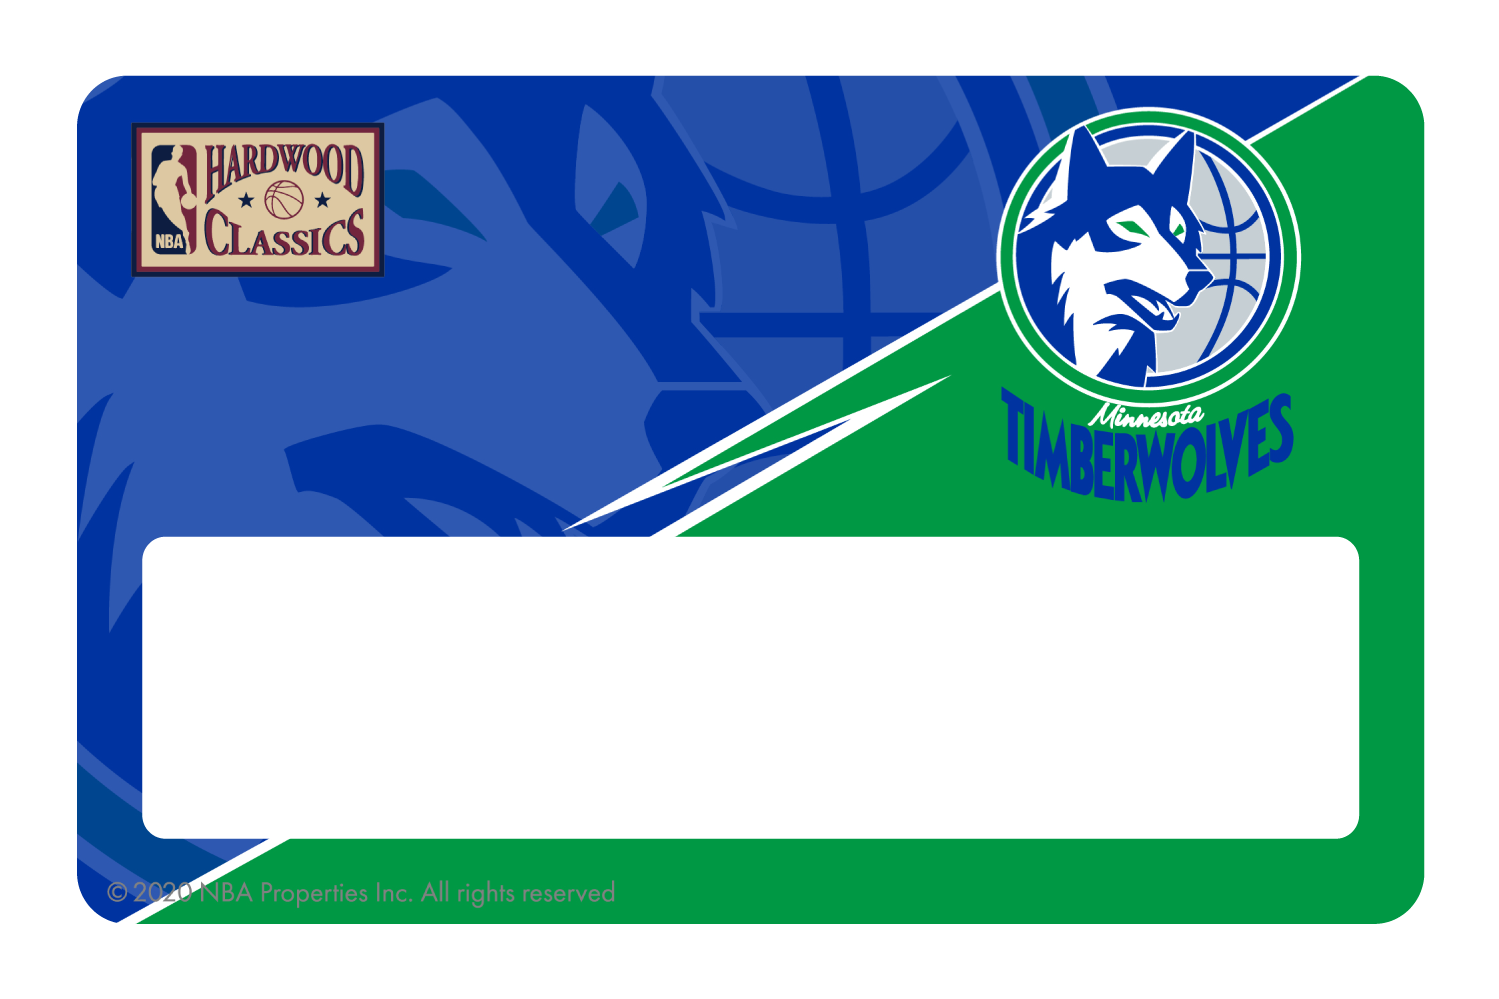 Minnesota Timberwolves: Uptempo Hardwood Classics